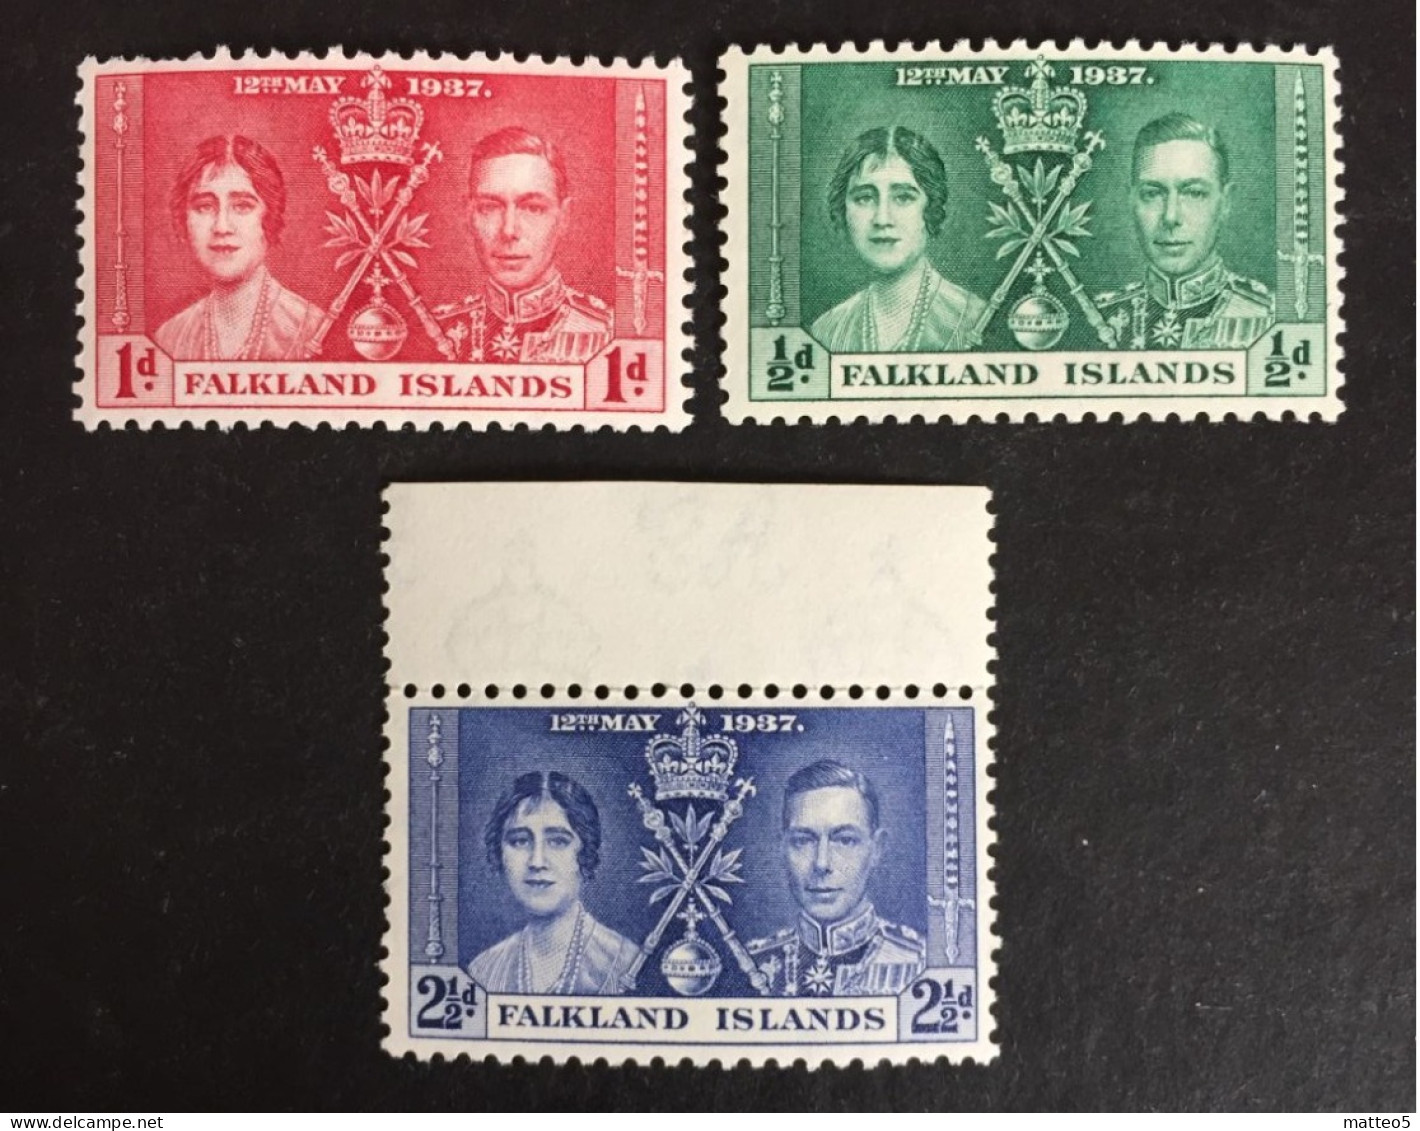 1937 - Falkland Islands - Coronation Of King George VII And Queen Elizabeth -  Unused - Falkland